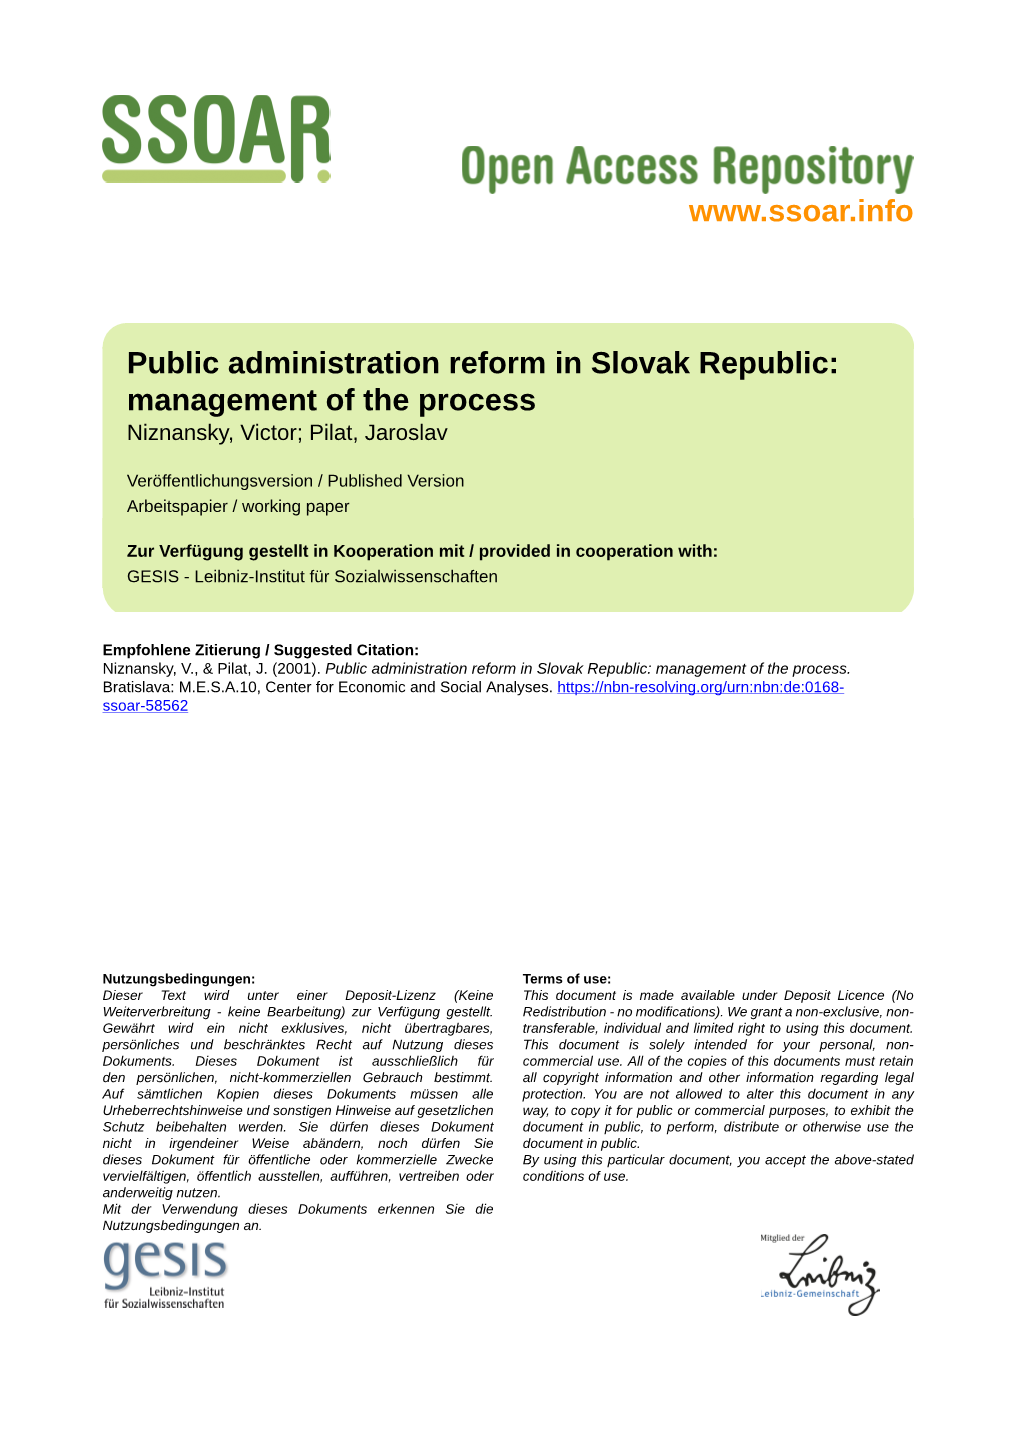 Public Administration Reform in Slovak Republic: Management of the Process Niznansky, Victor; Pilat, Jaroslav